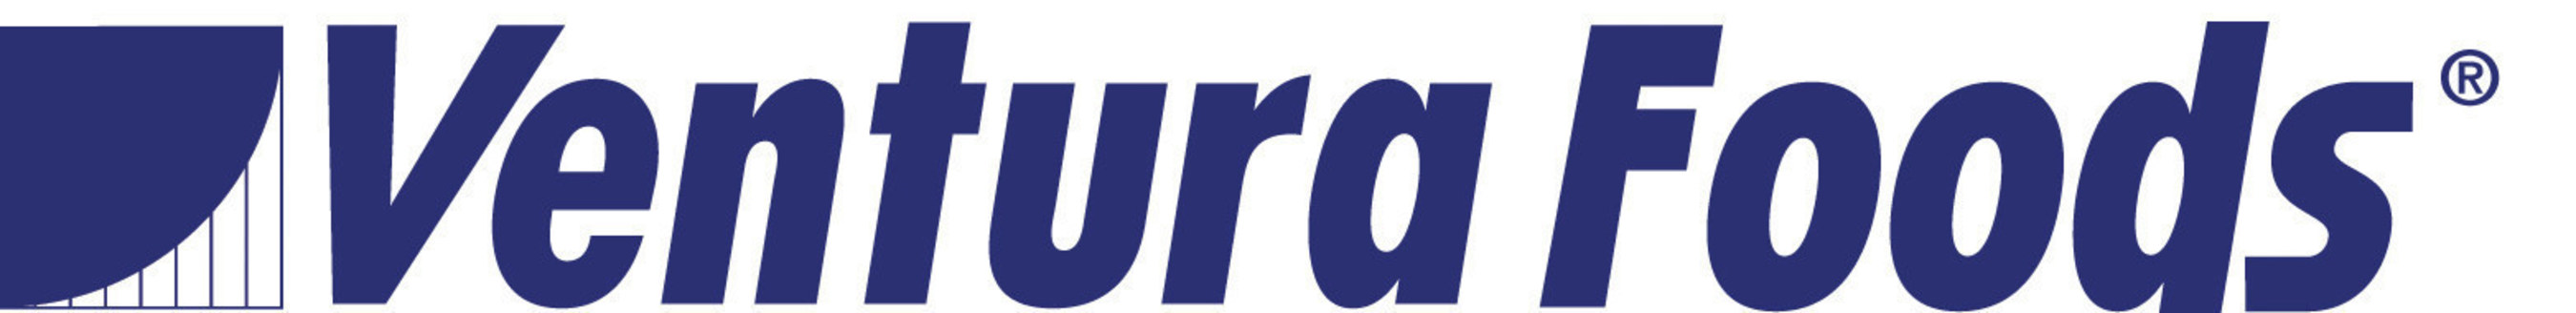 Ventura Foods Logo